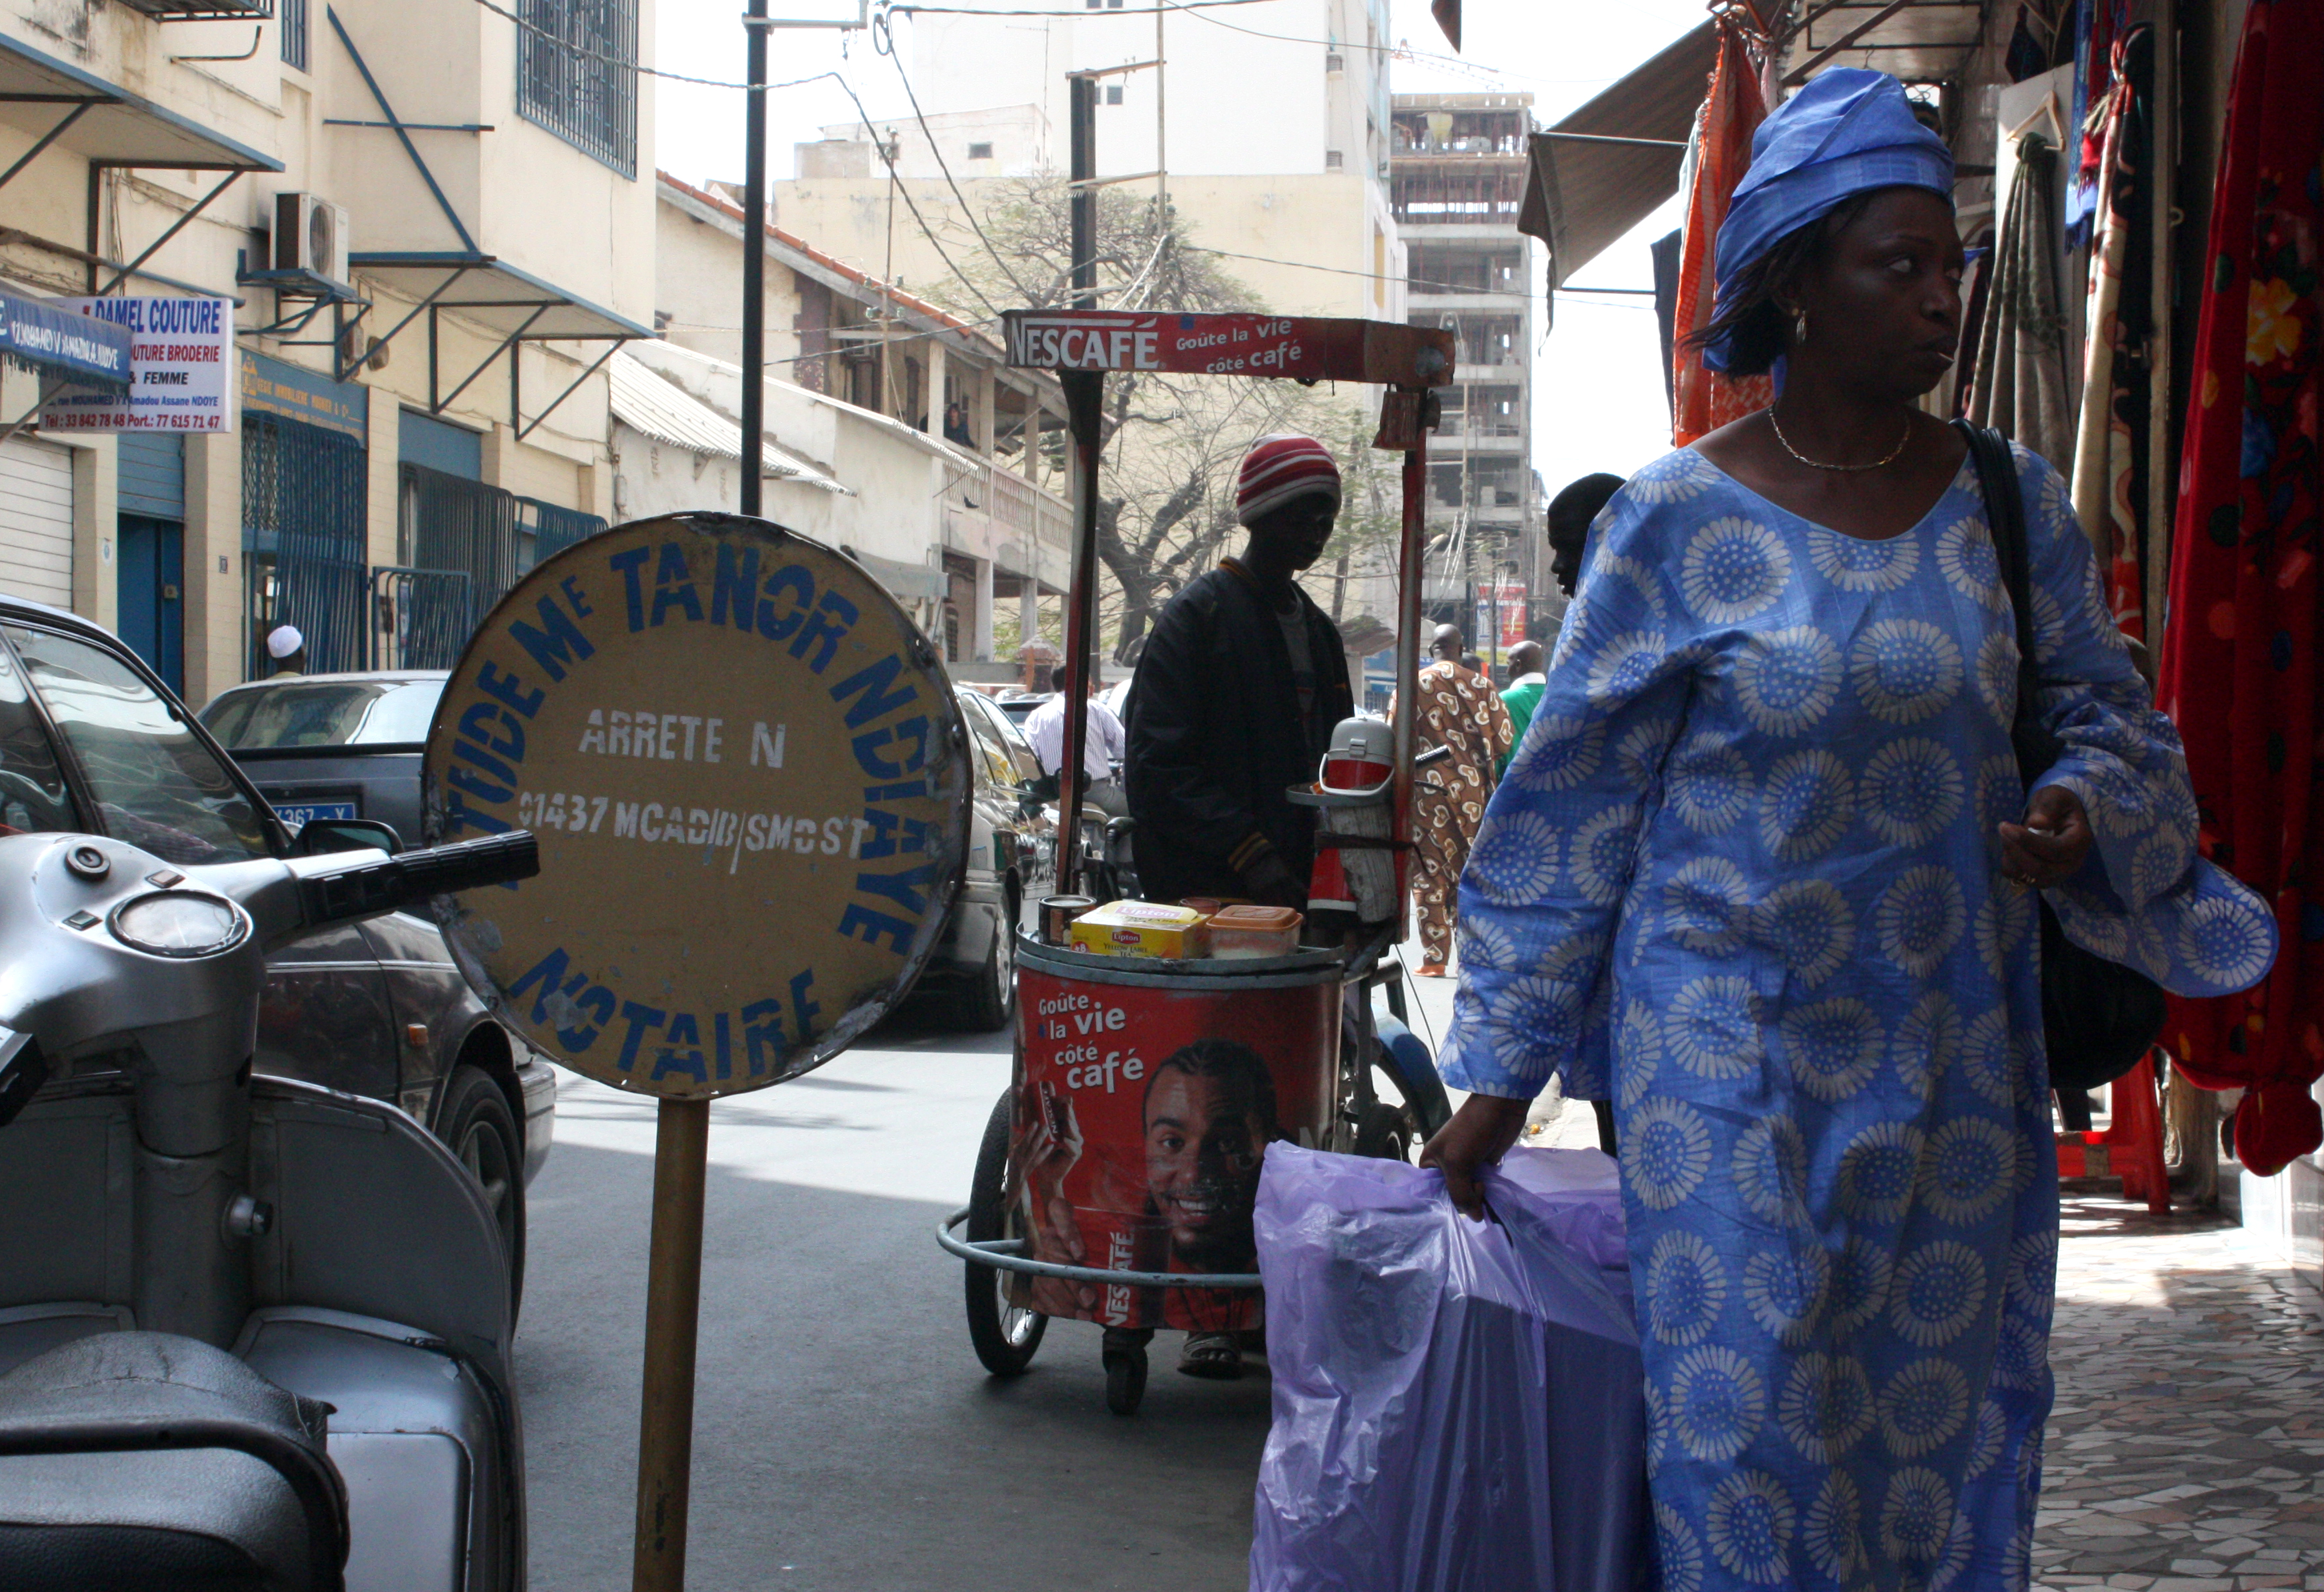 Street scene in Dakar, Senegal